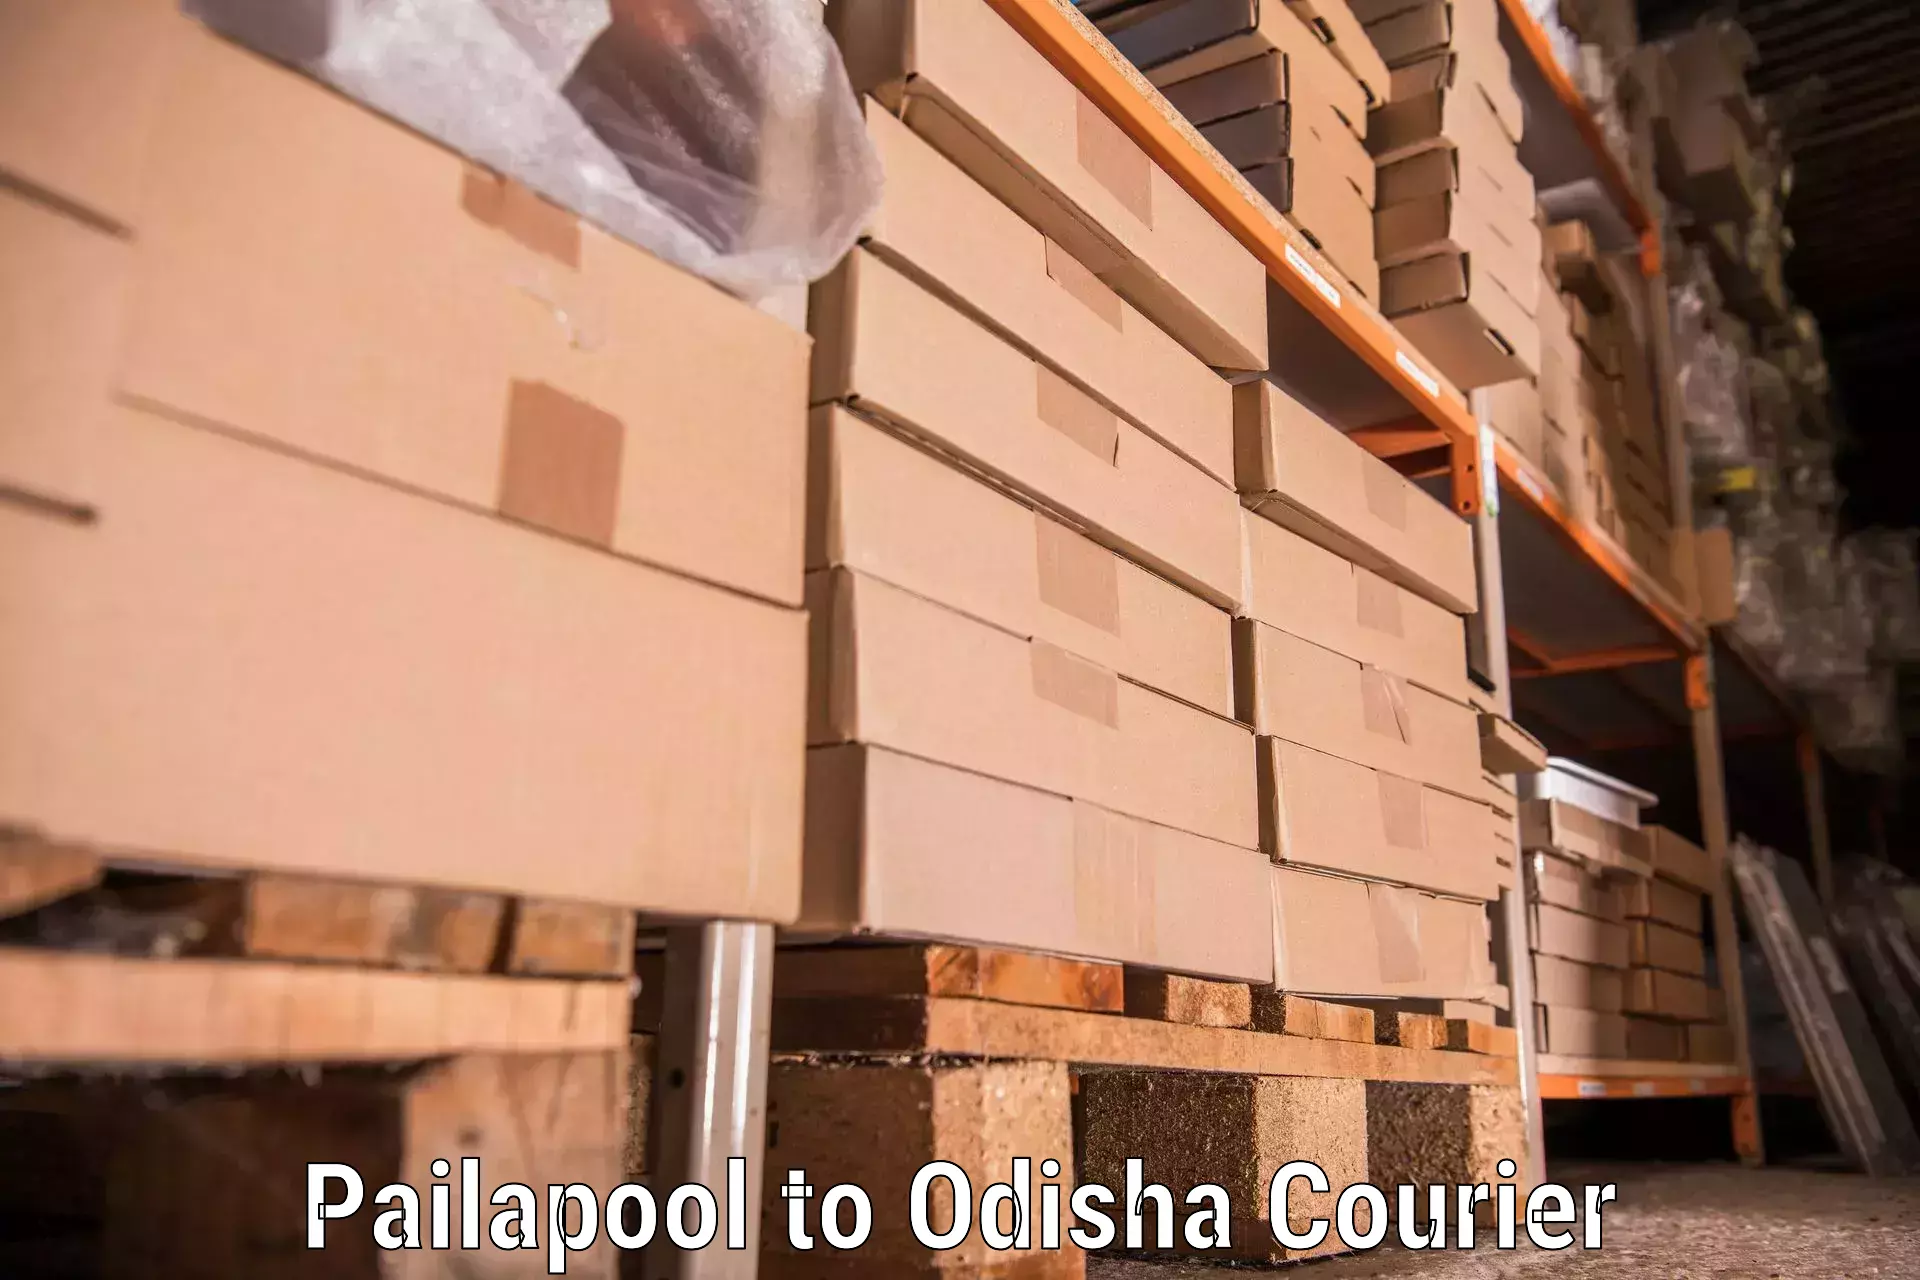 Professional moving company Pailapool to Riamal